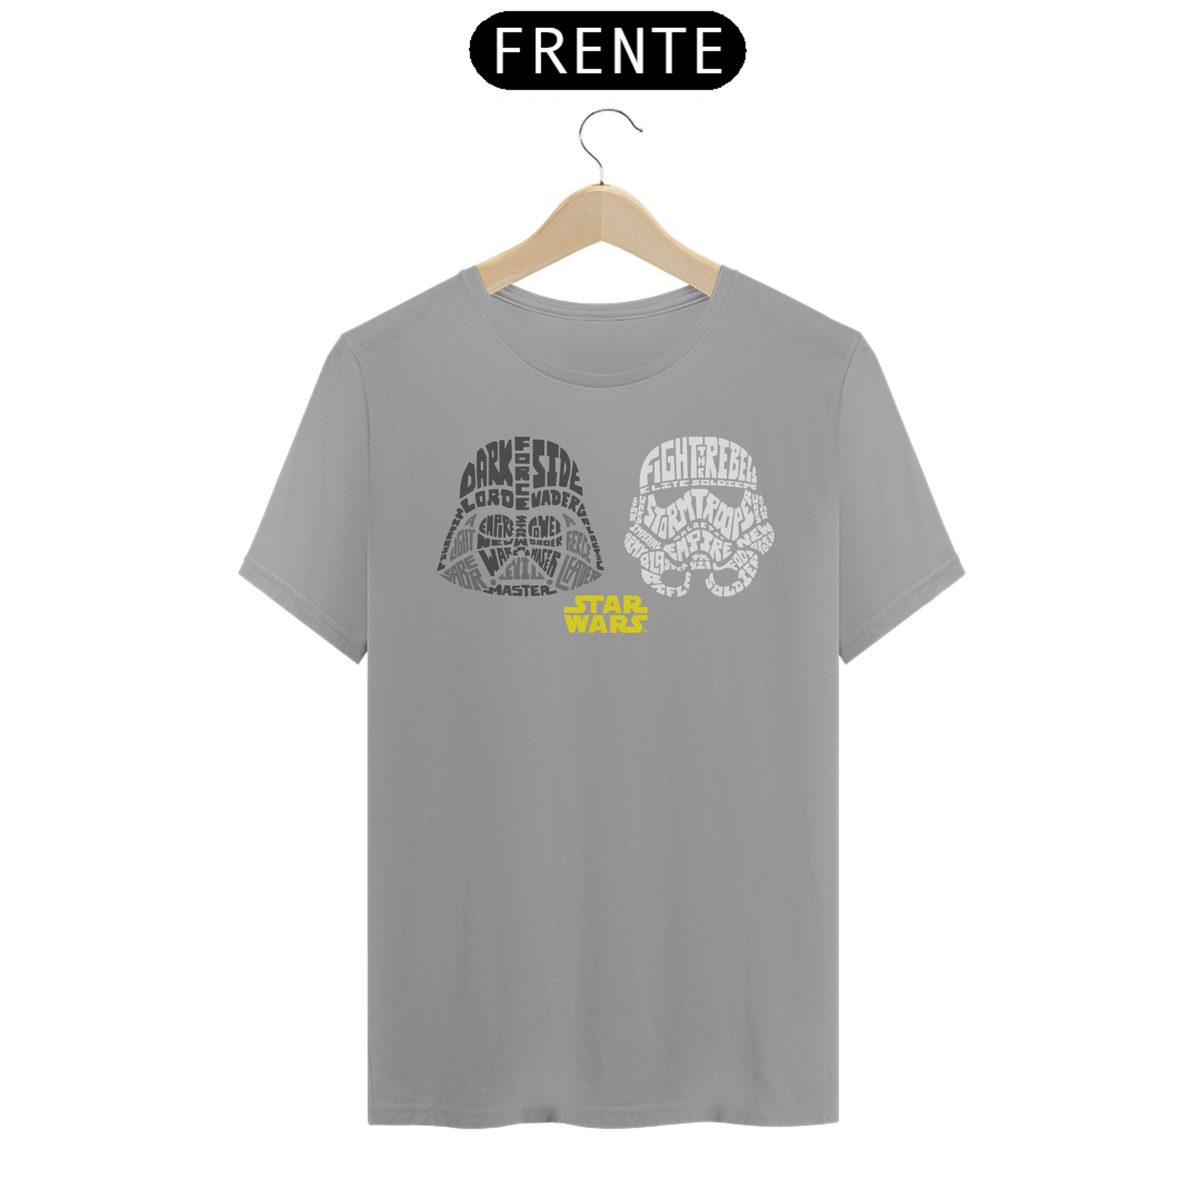 Nome do produto: Star Wars: Vader e Trooper